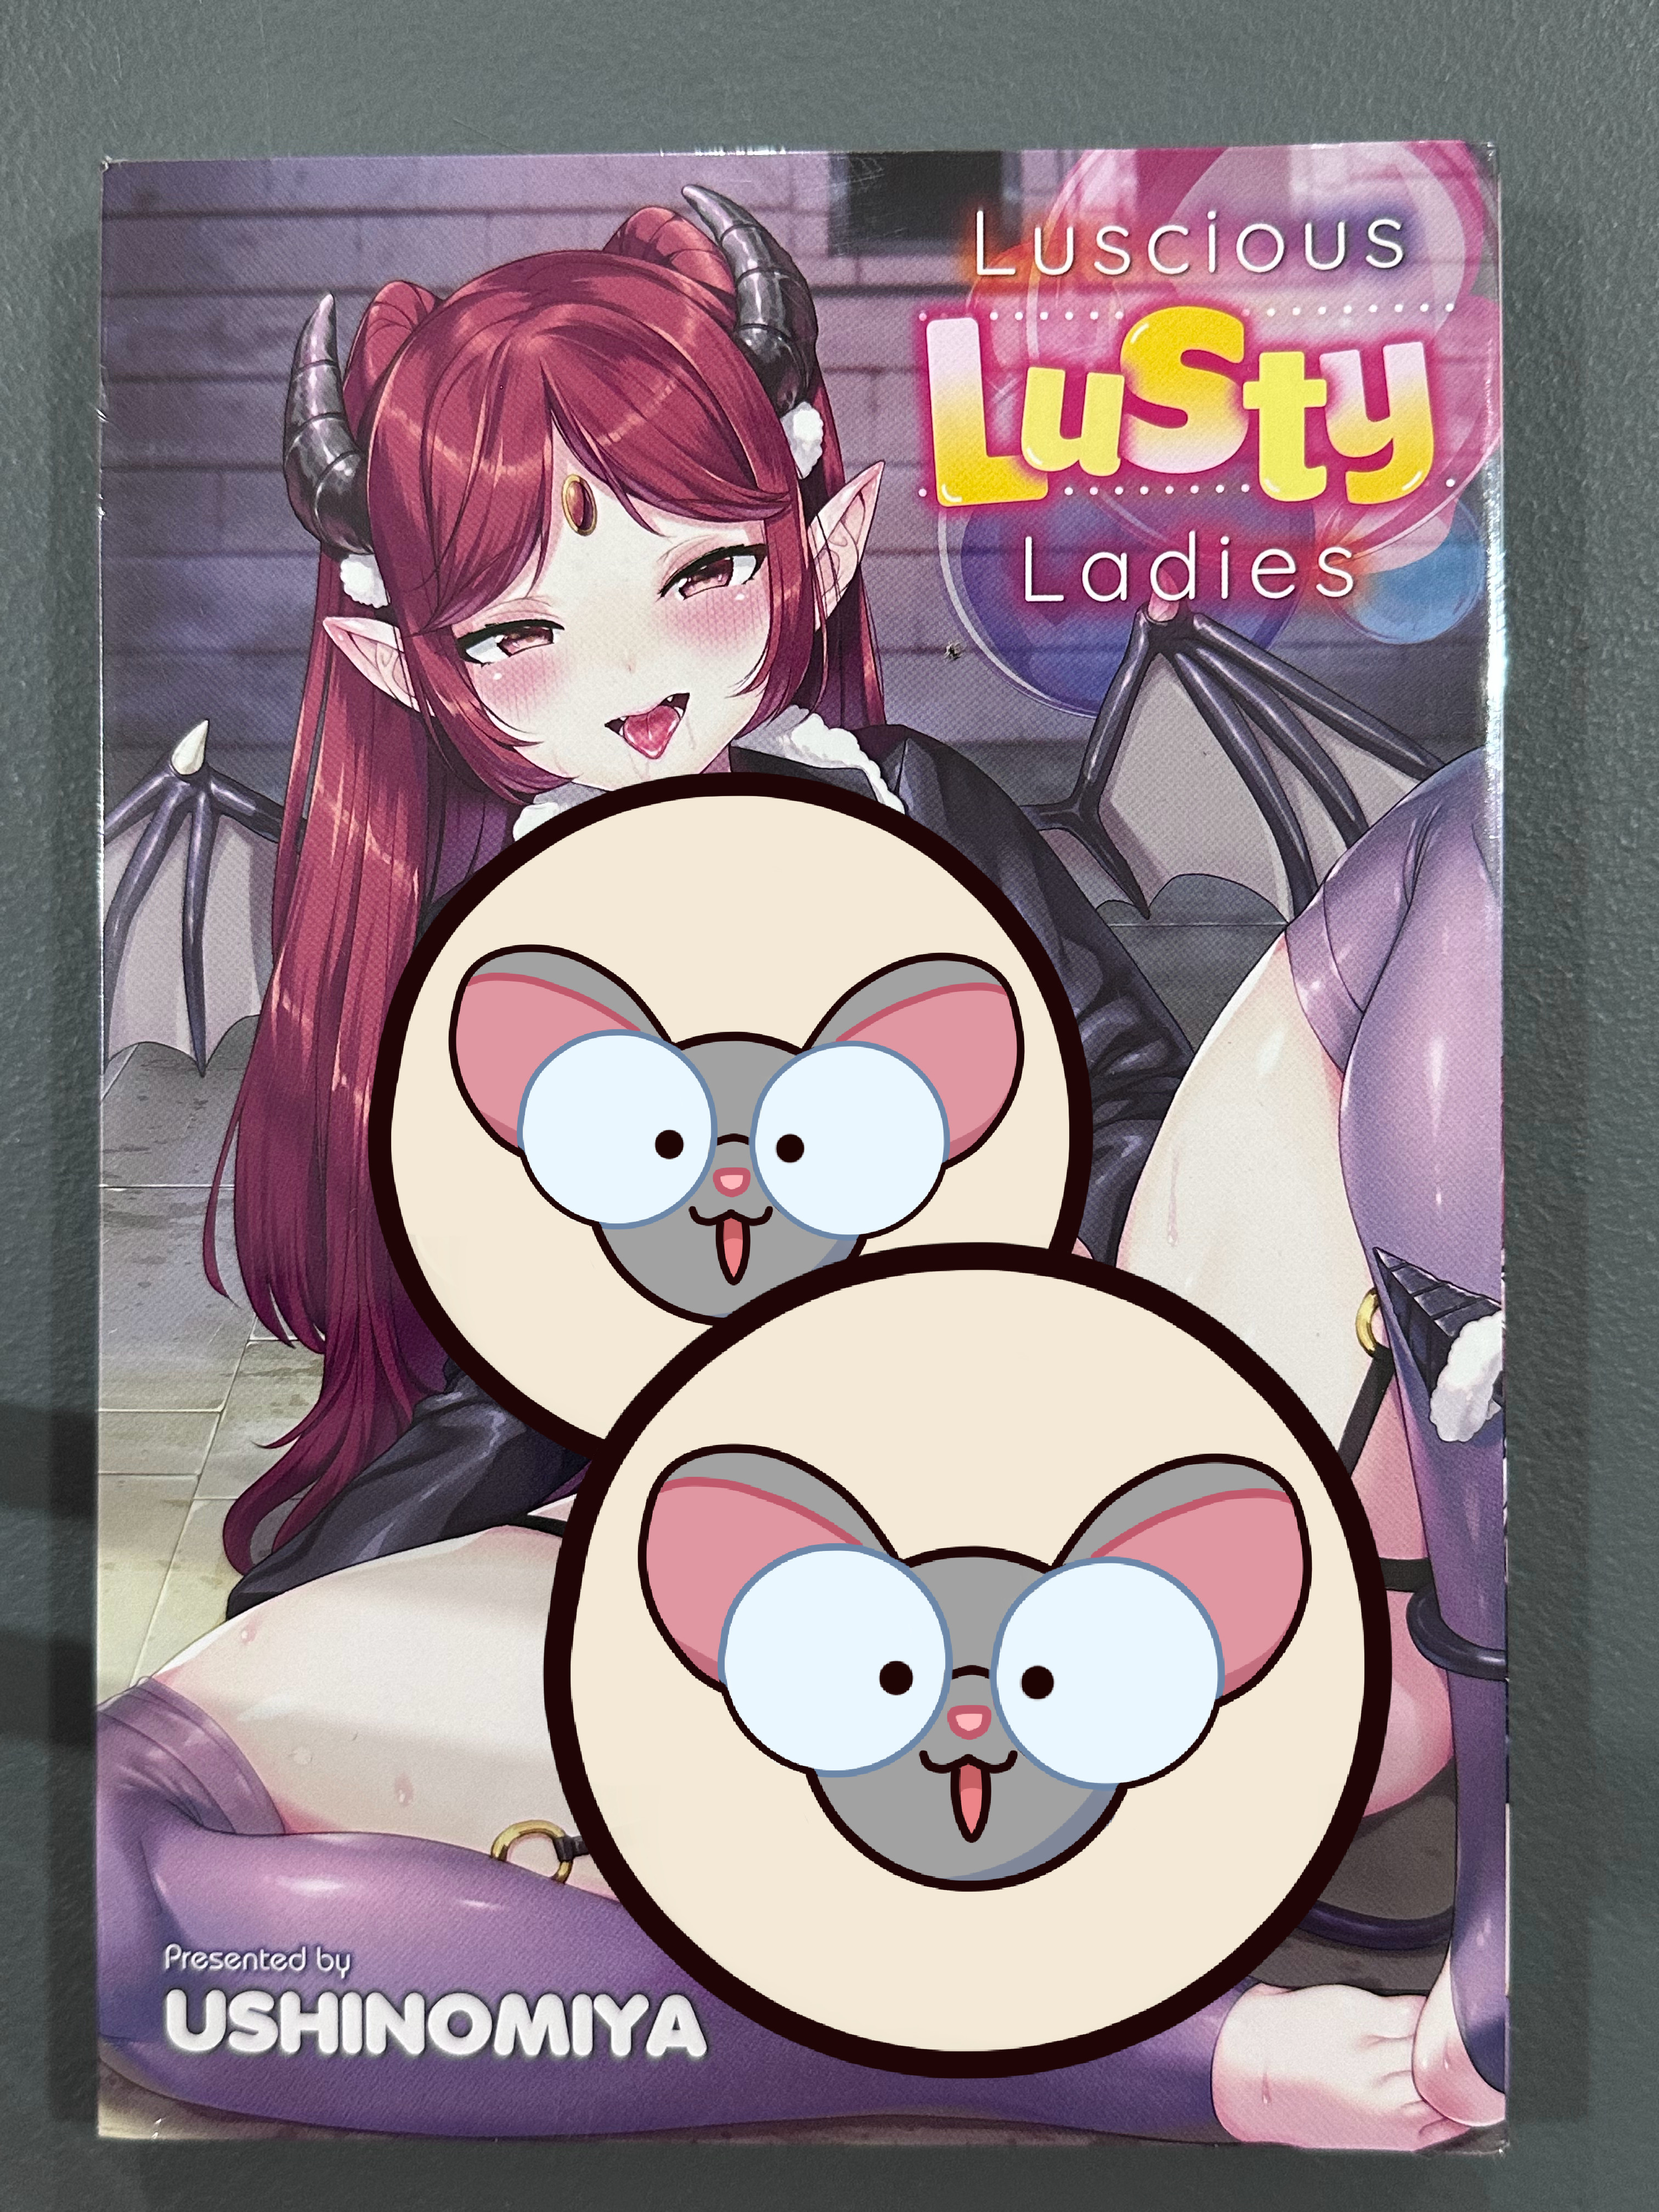 Lucious lusty ladies